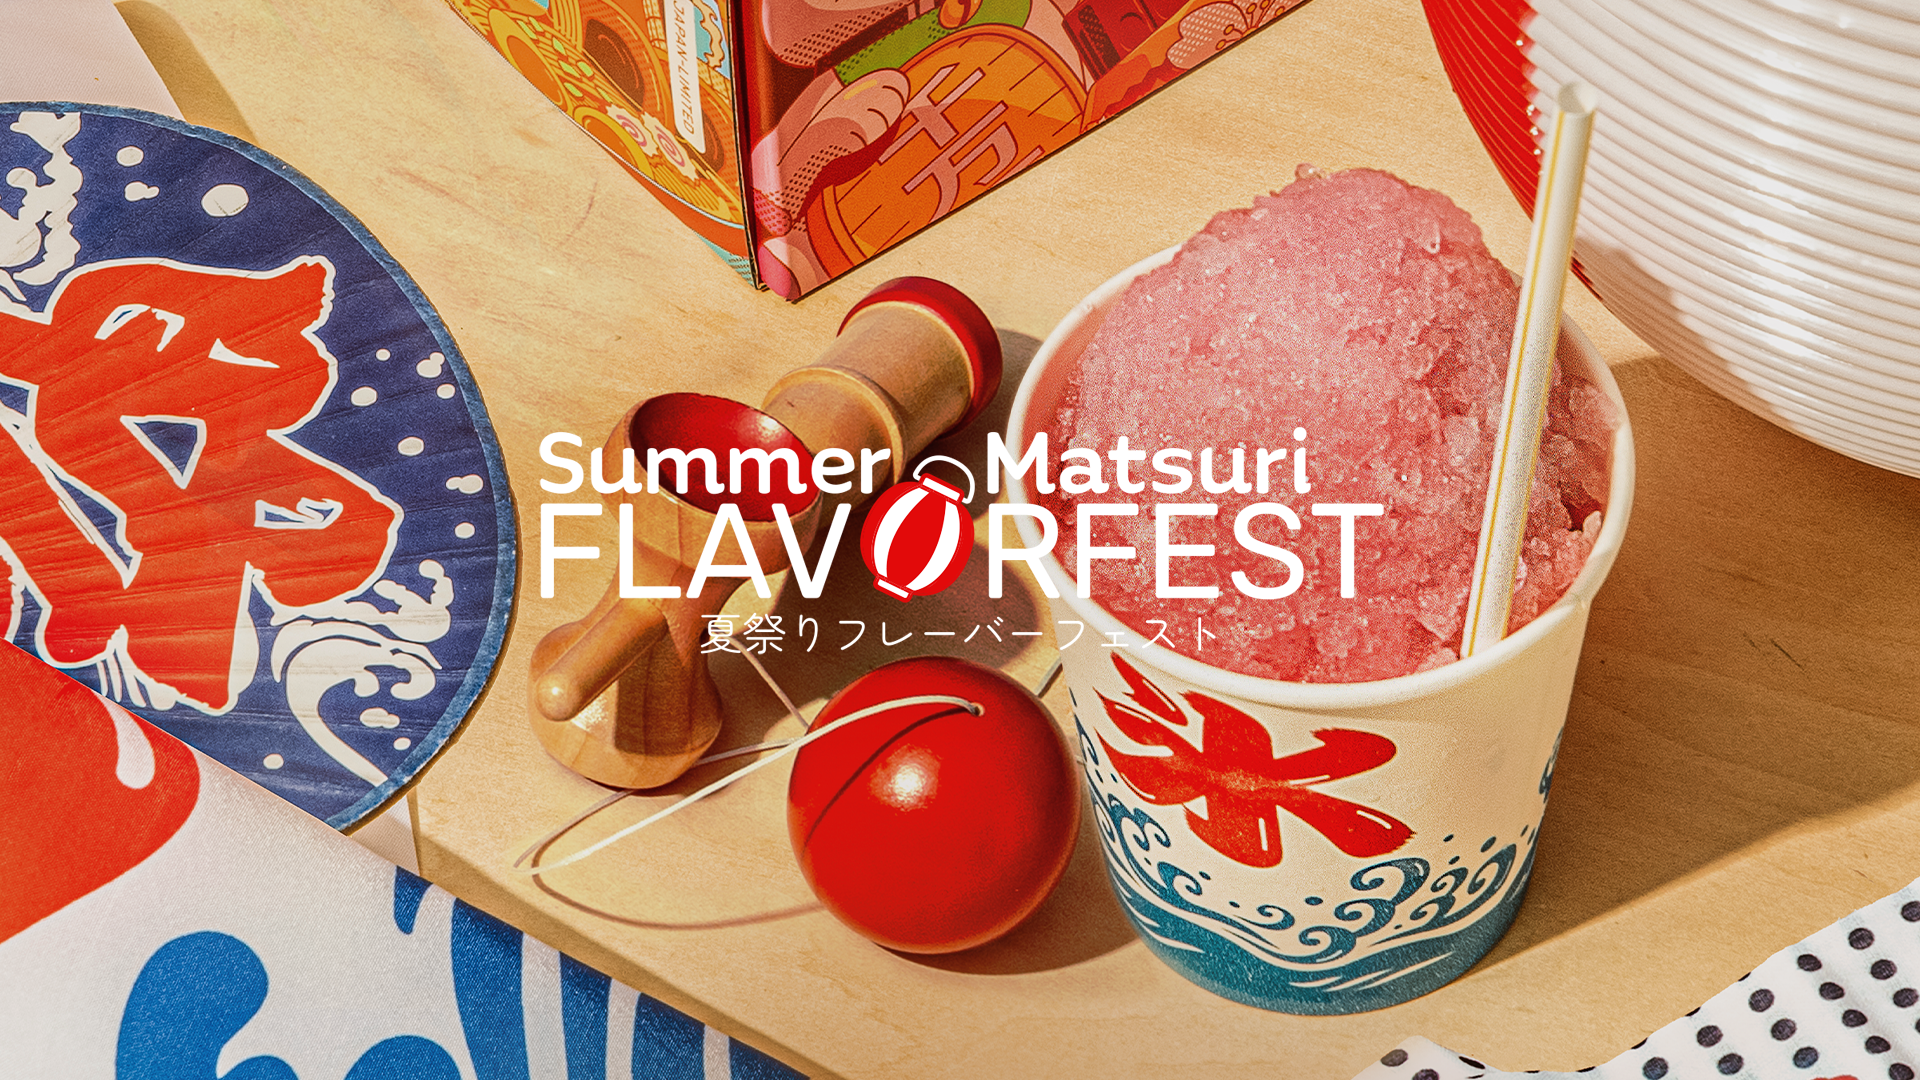 TokyoTreat's Summer Matsuri Flavorfest unboxing video thumbnail.